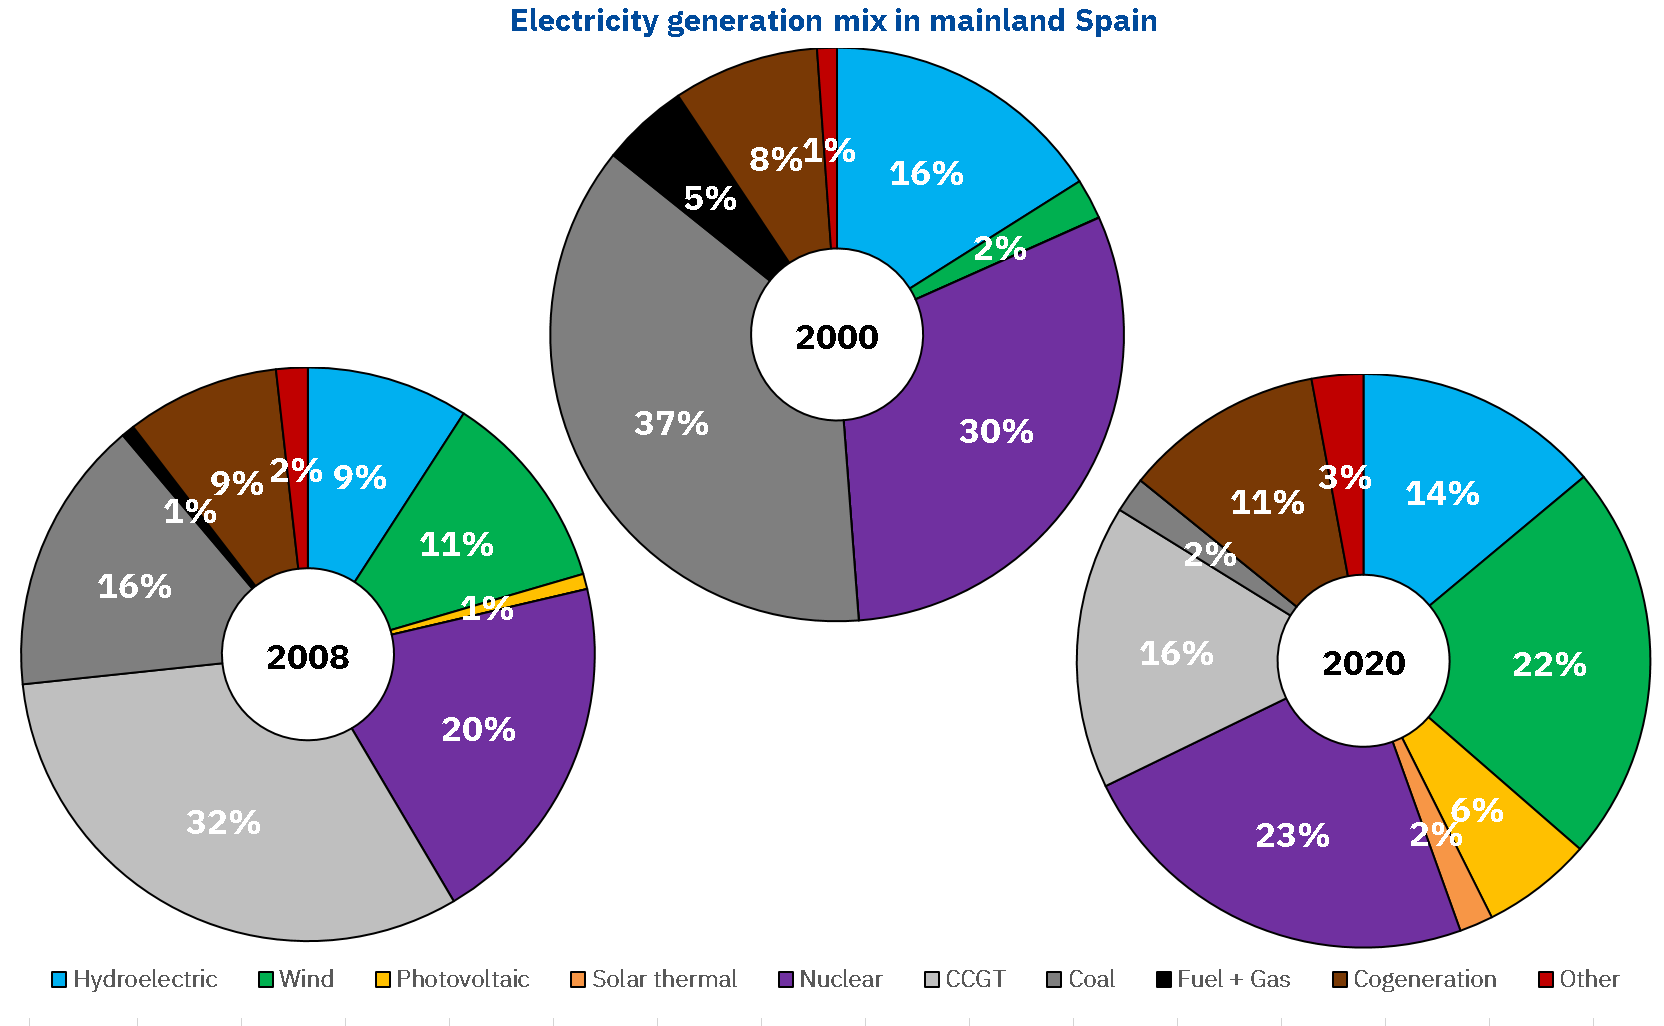 AleaSoft - Electricity mix Spain